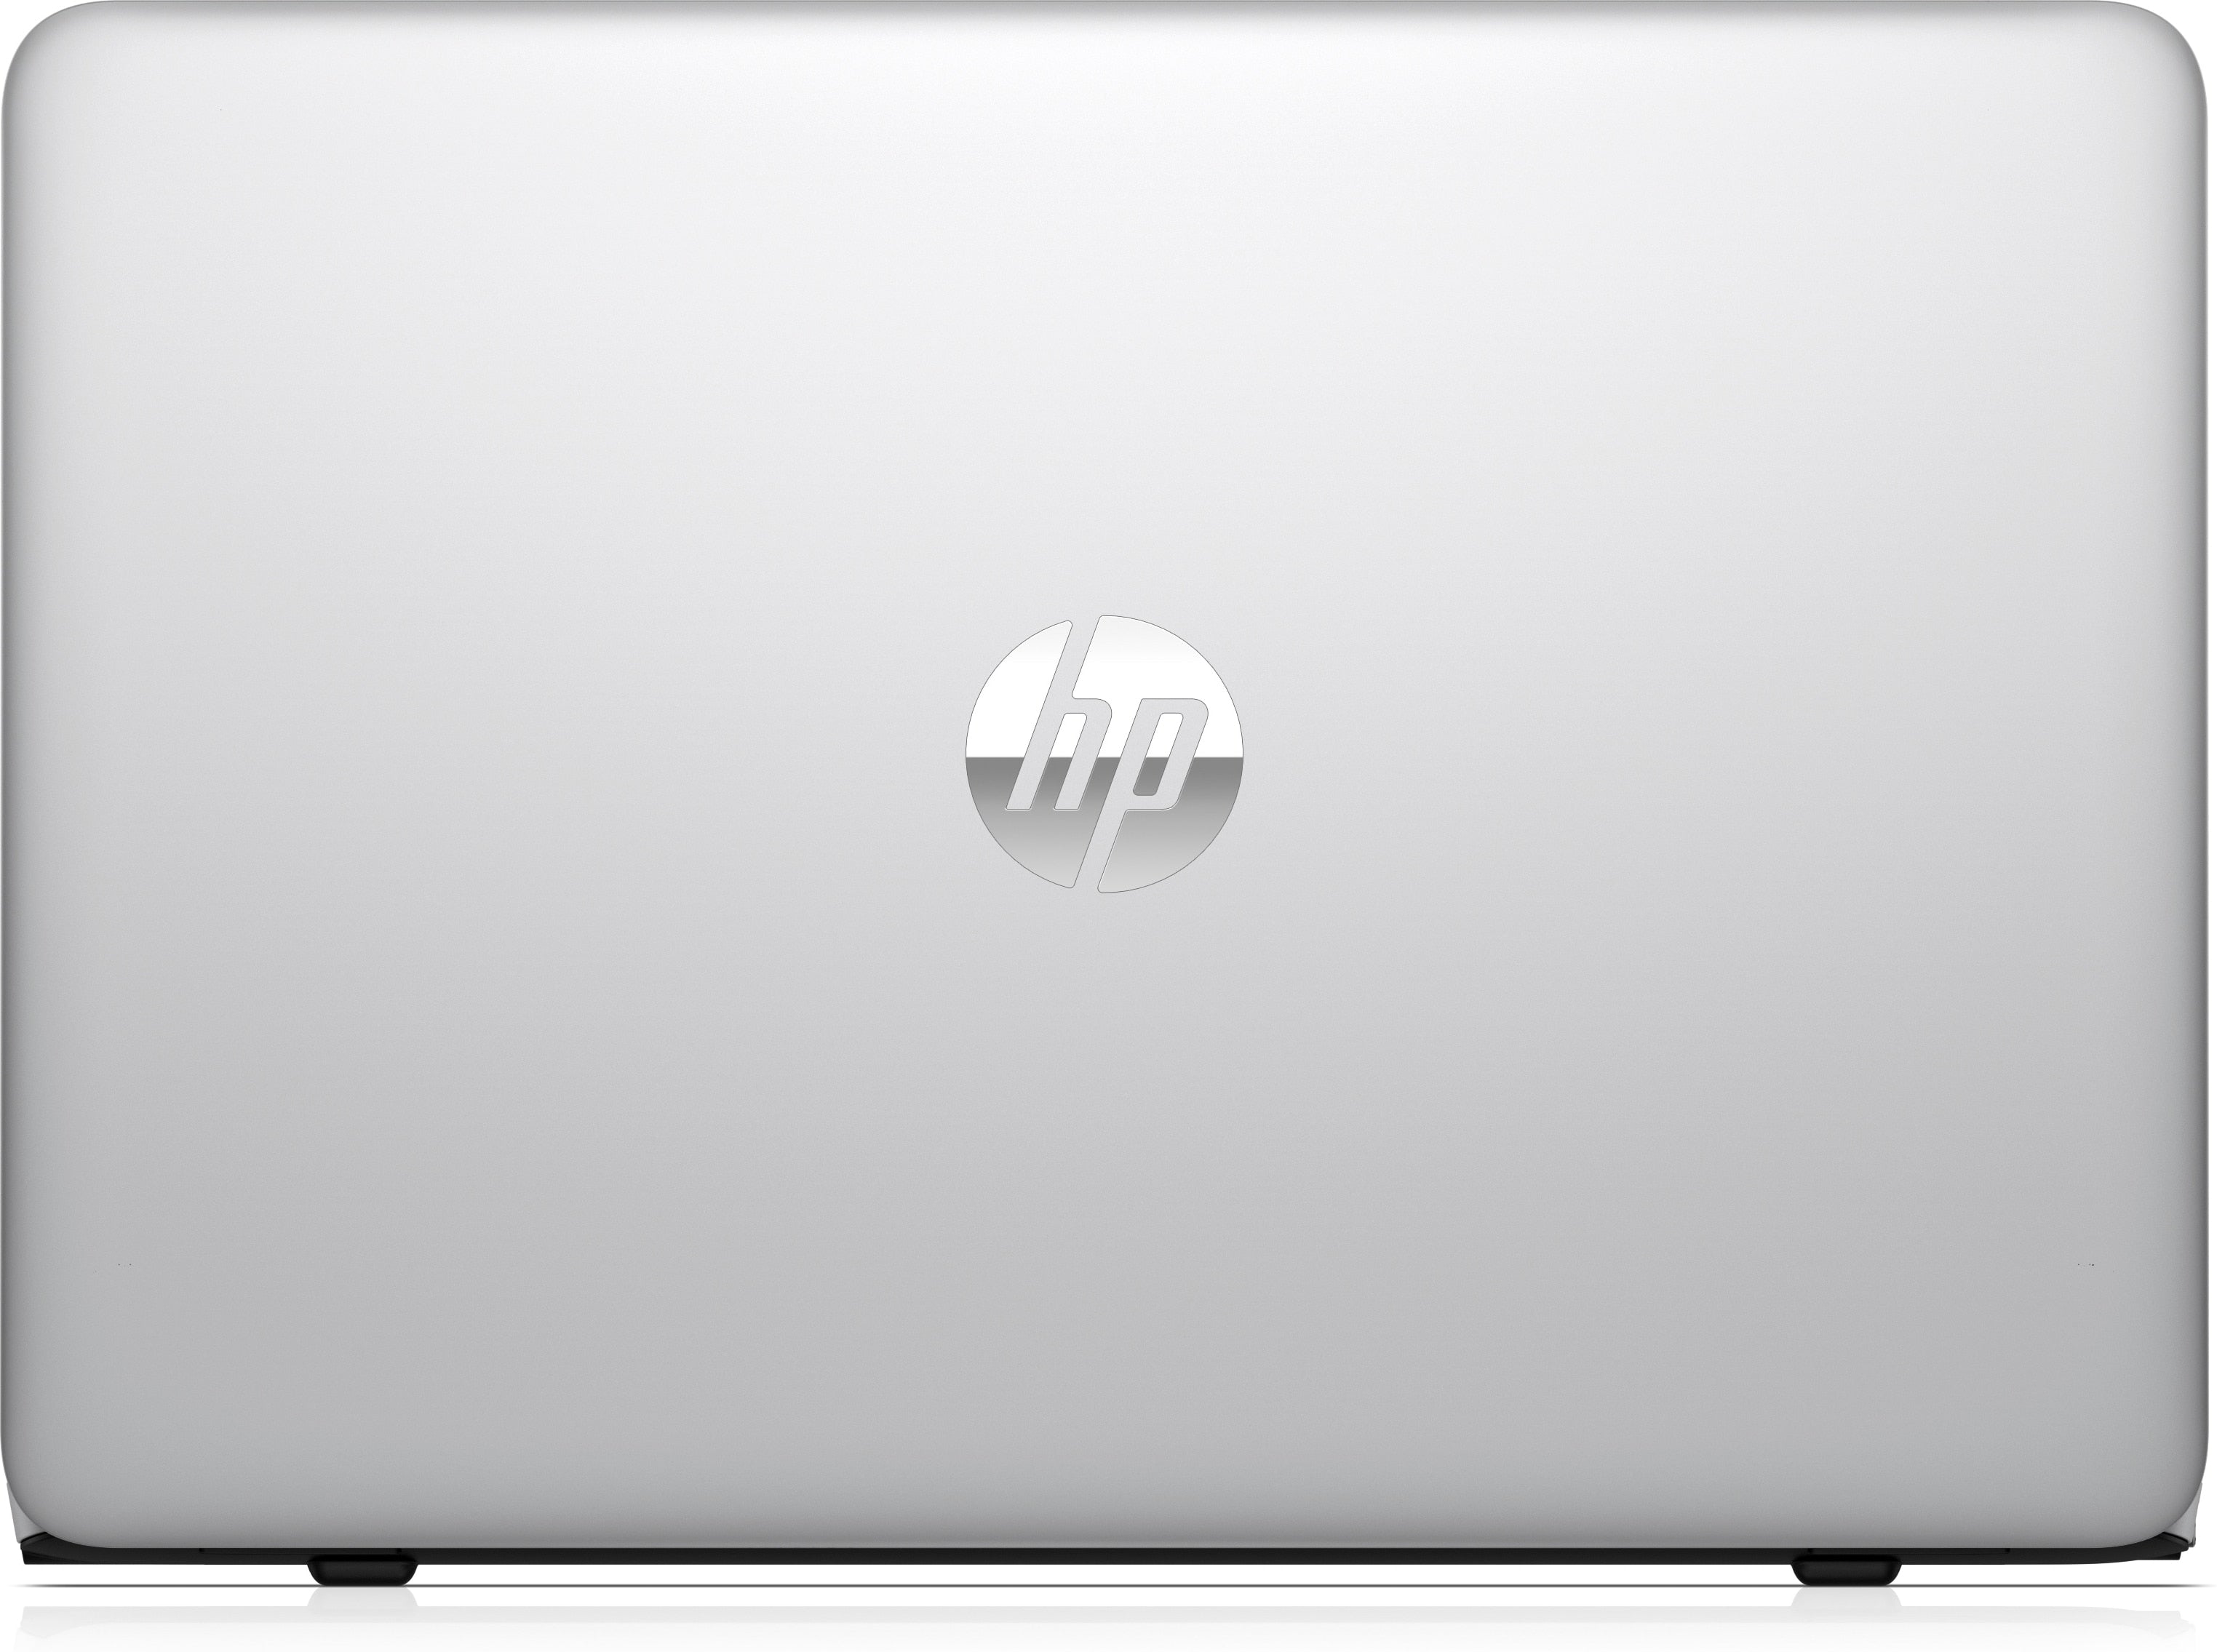 HP EliteBook 745 G4 Notebook rear view